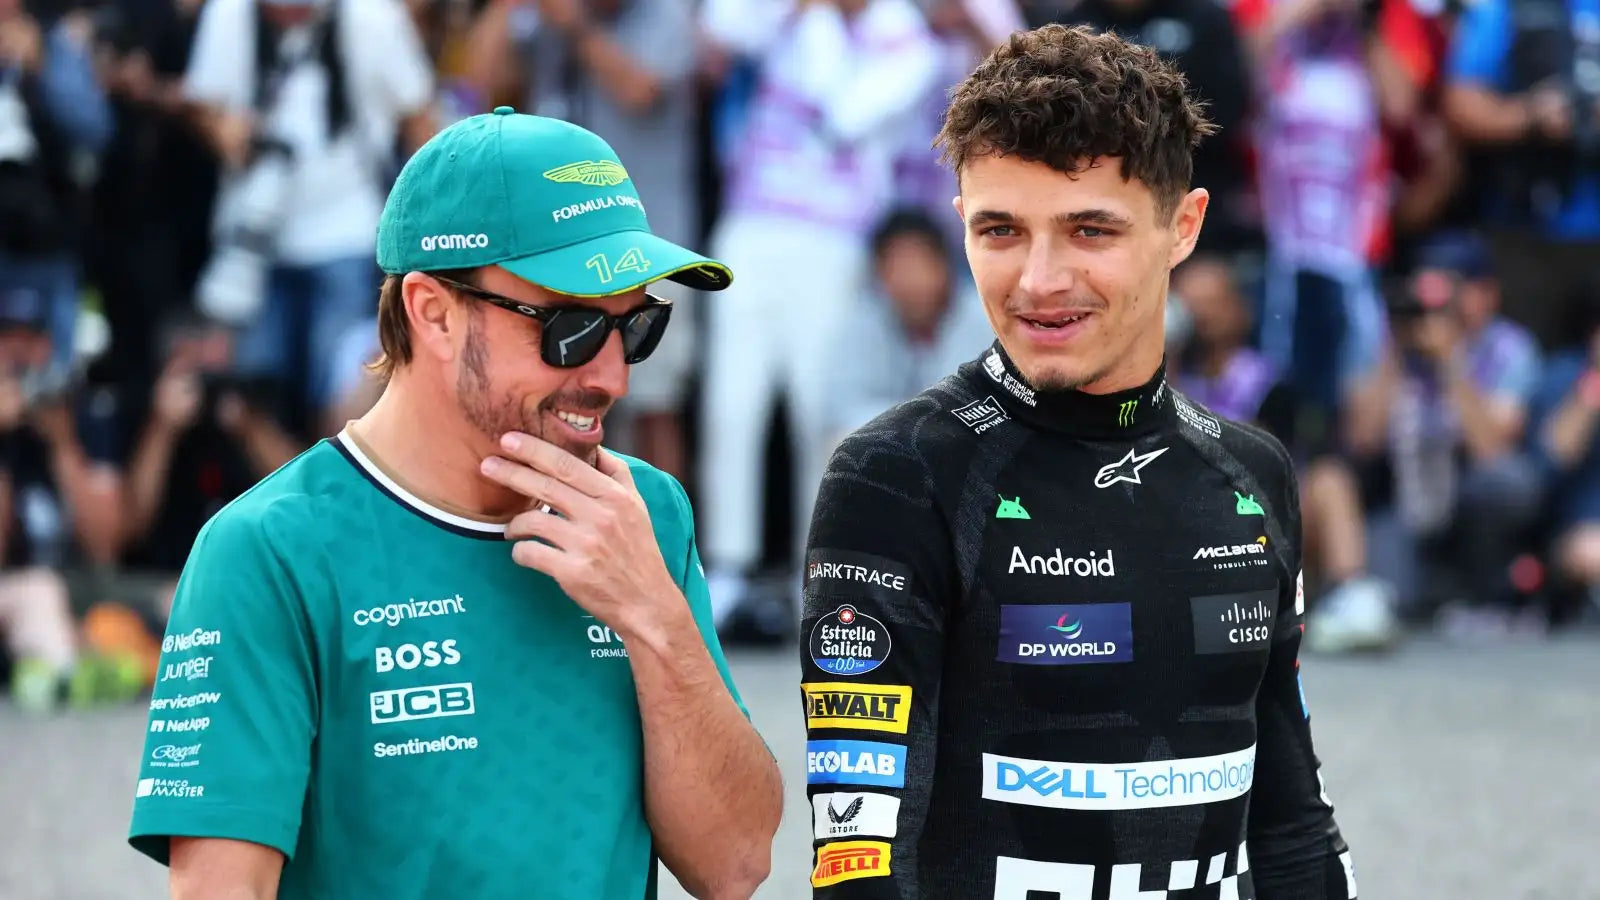 Fernando Alonso teases Lando Norris as Saudi GP ‘jump start’ quip made